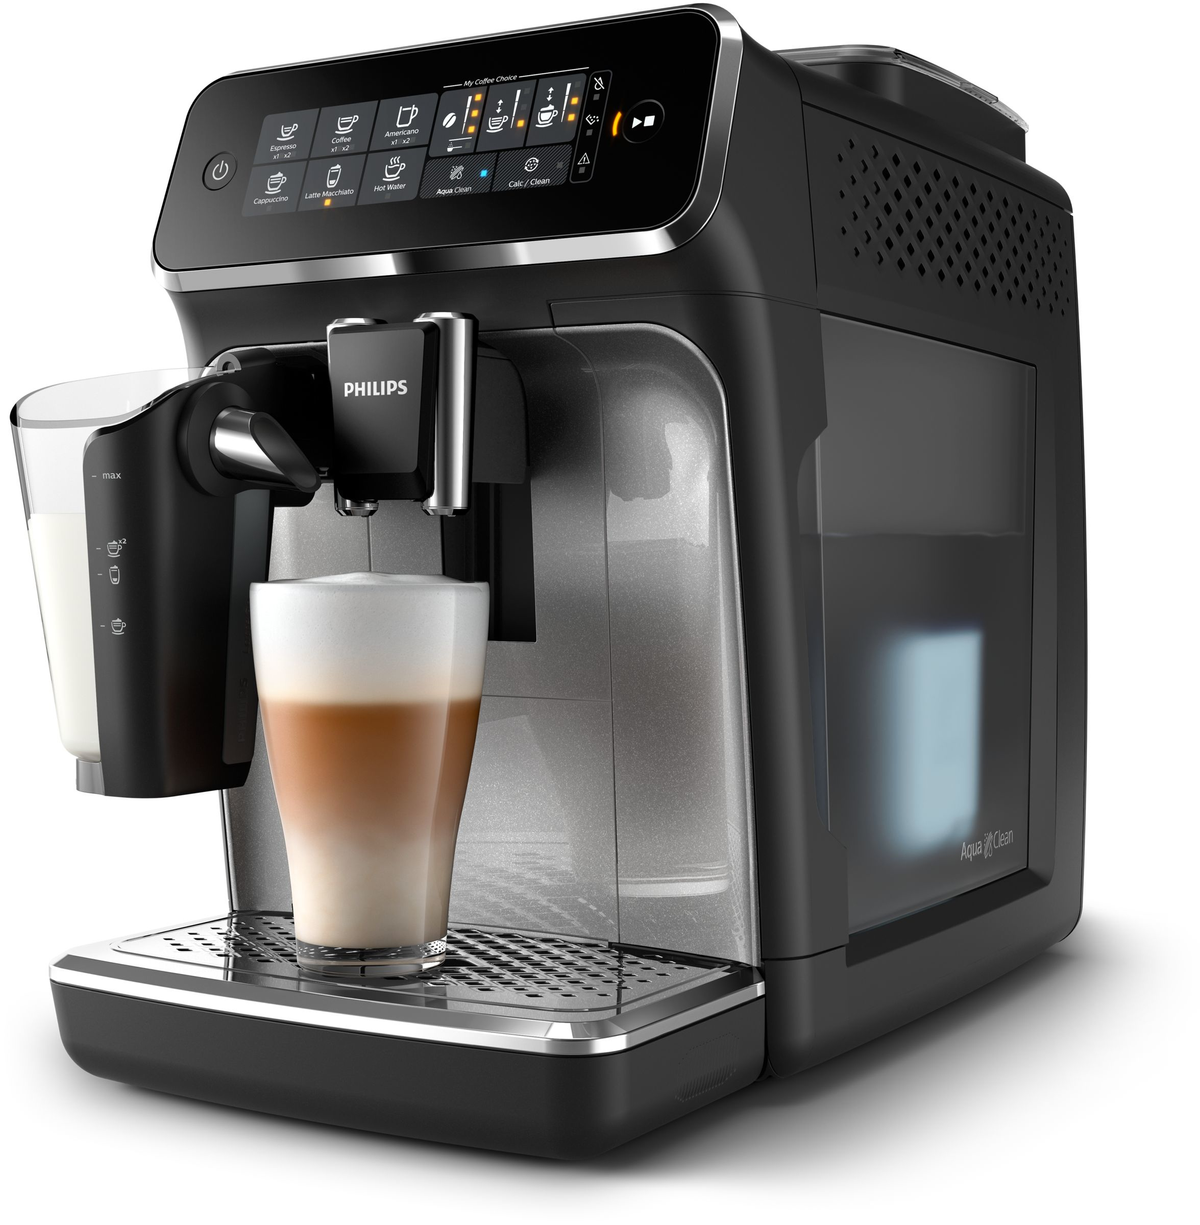 Kaffeevollautomat Matt-Schwarz/Silber-lackierte PHILIPS SW EP 3246/70 Arena LATTEGO 3200